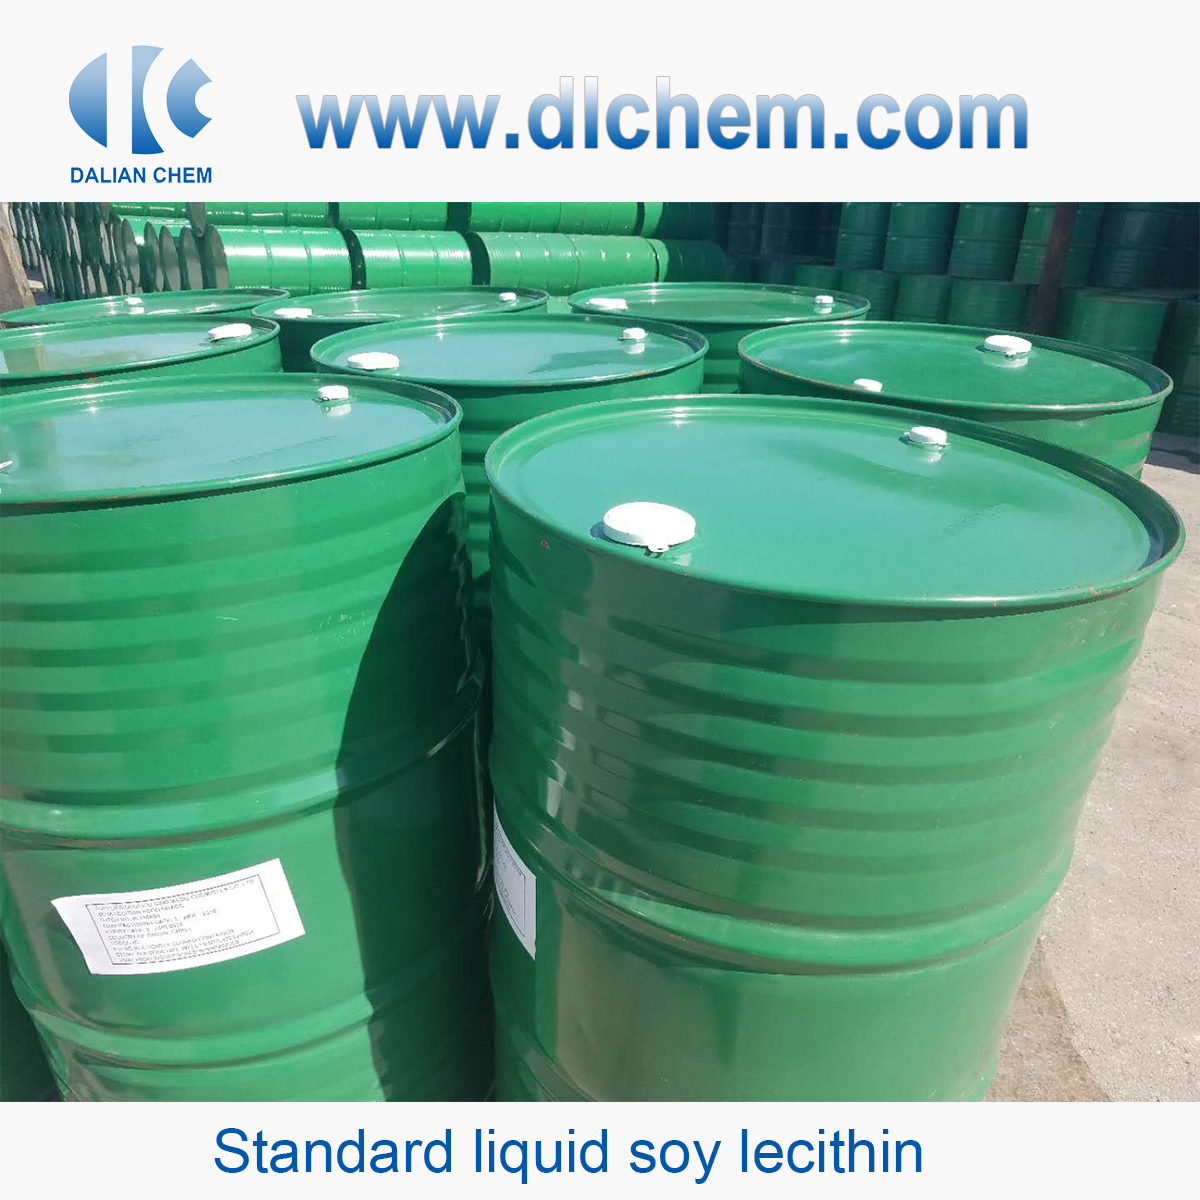 Standard liquid soy lecithin